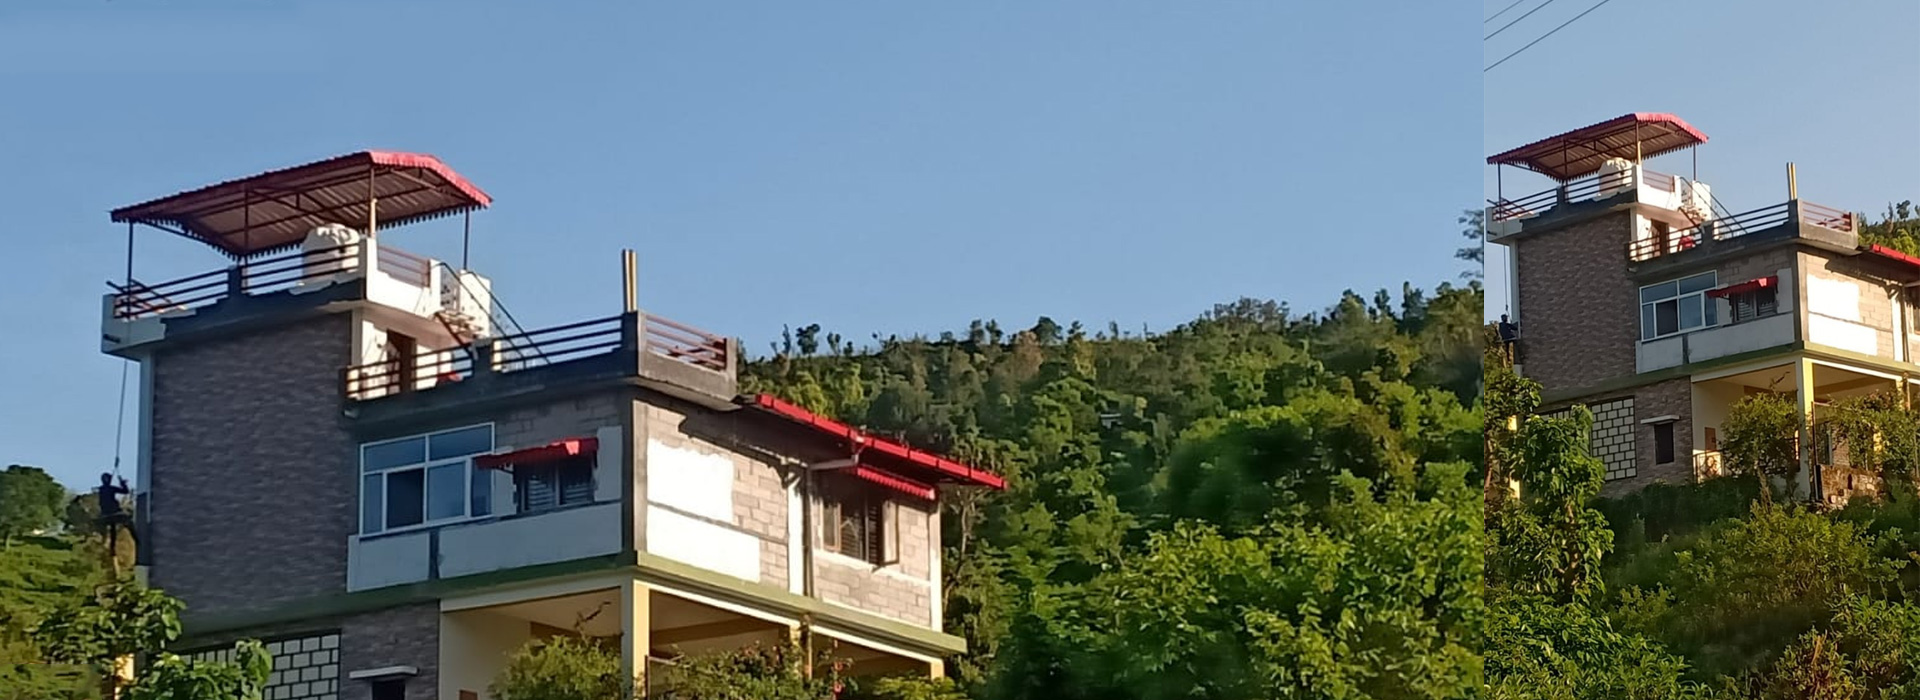 Roshil Village